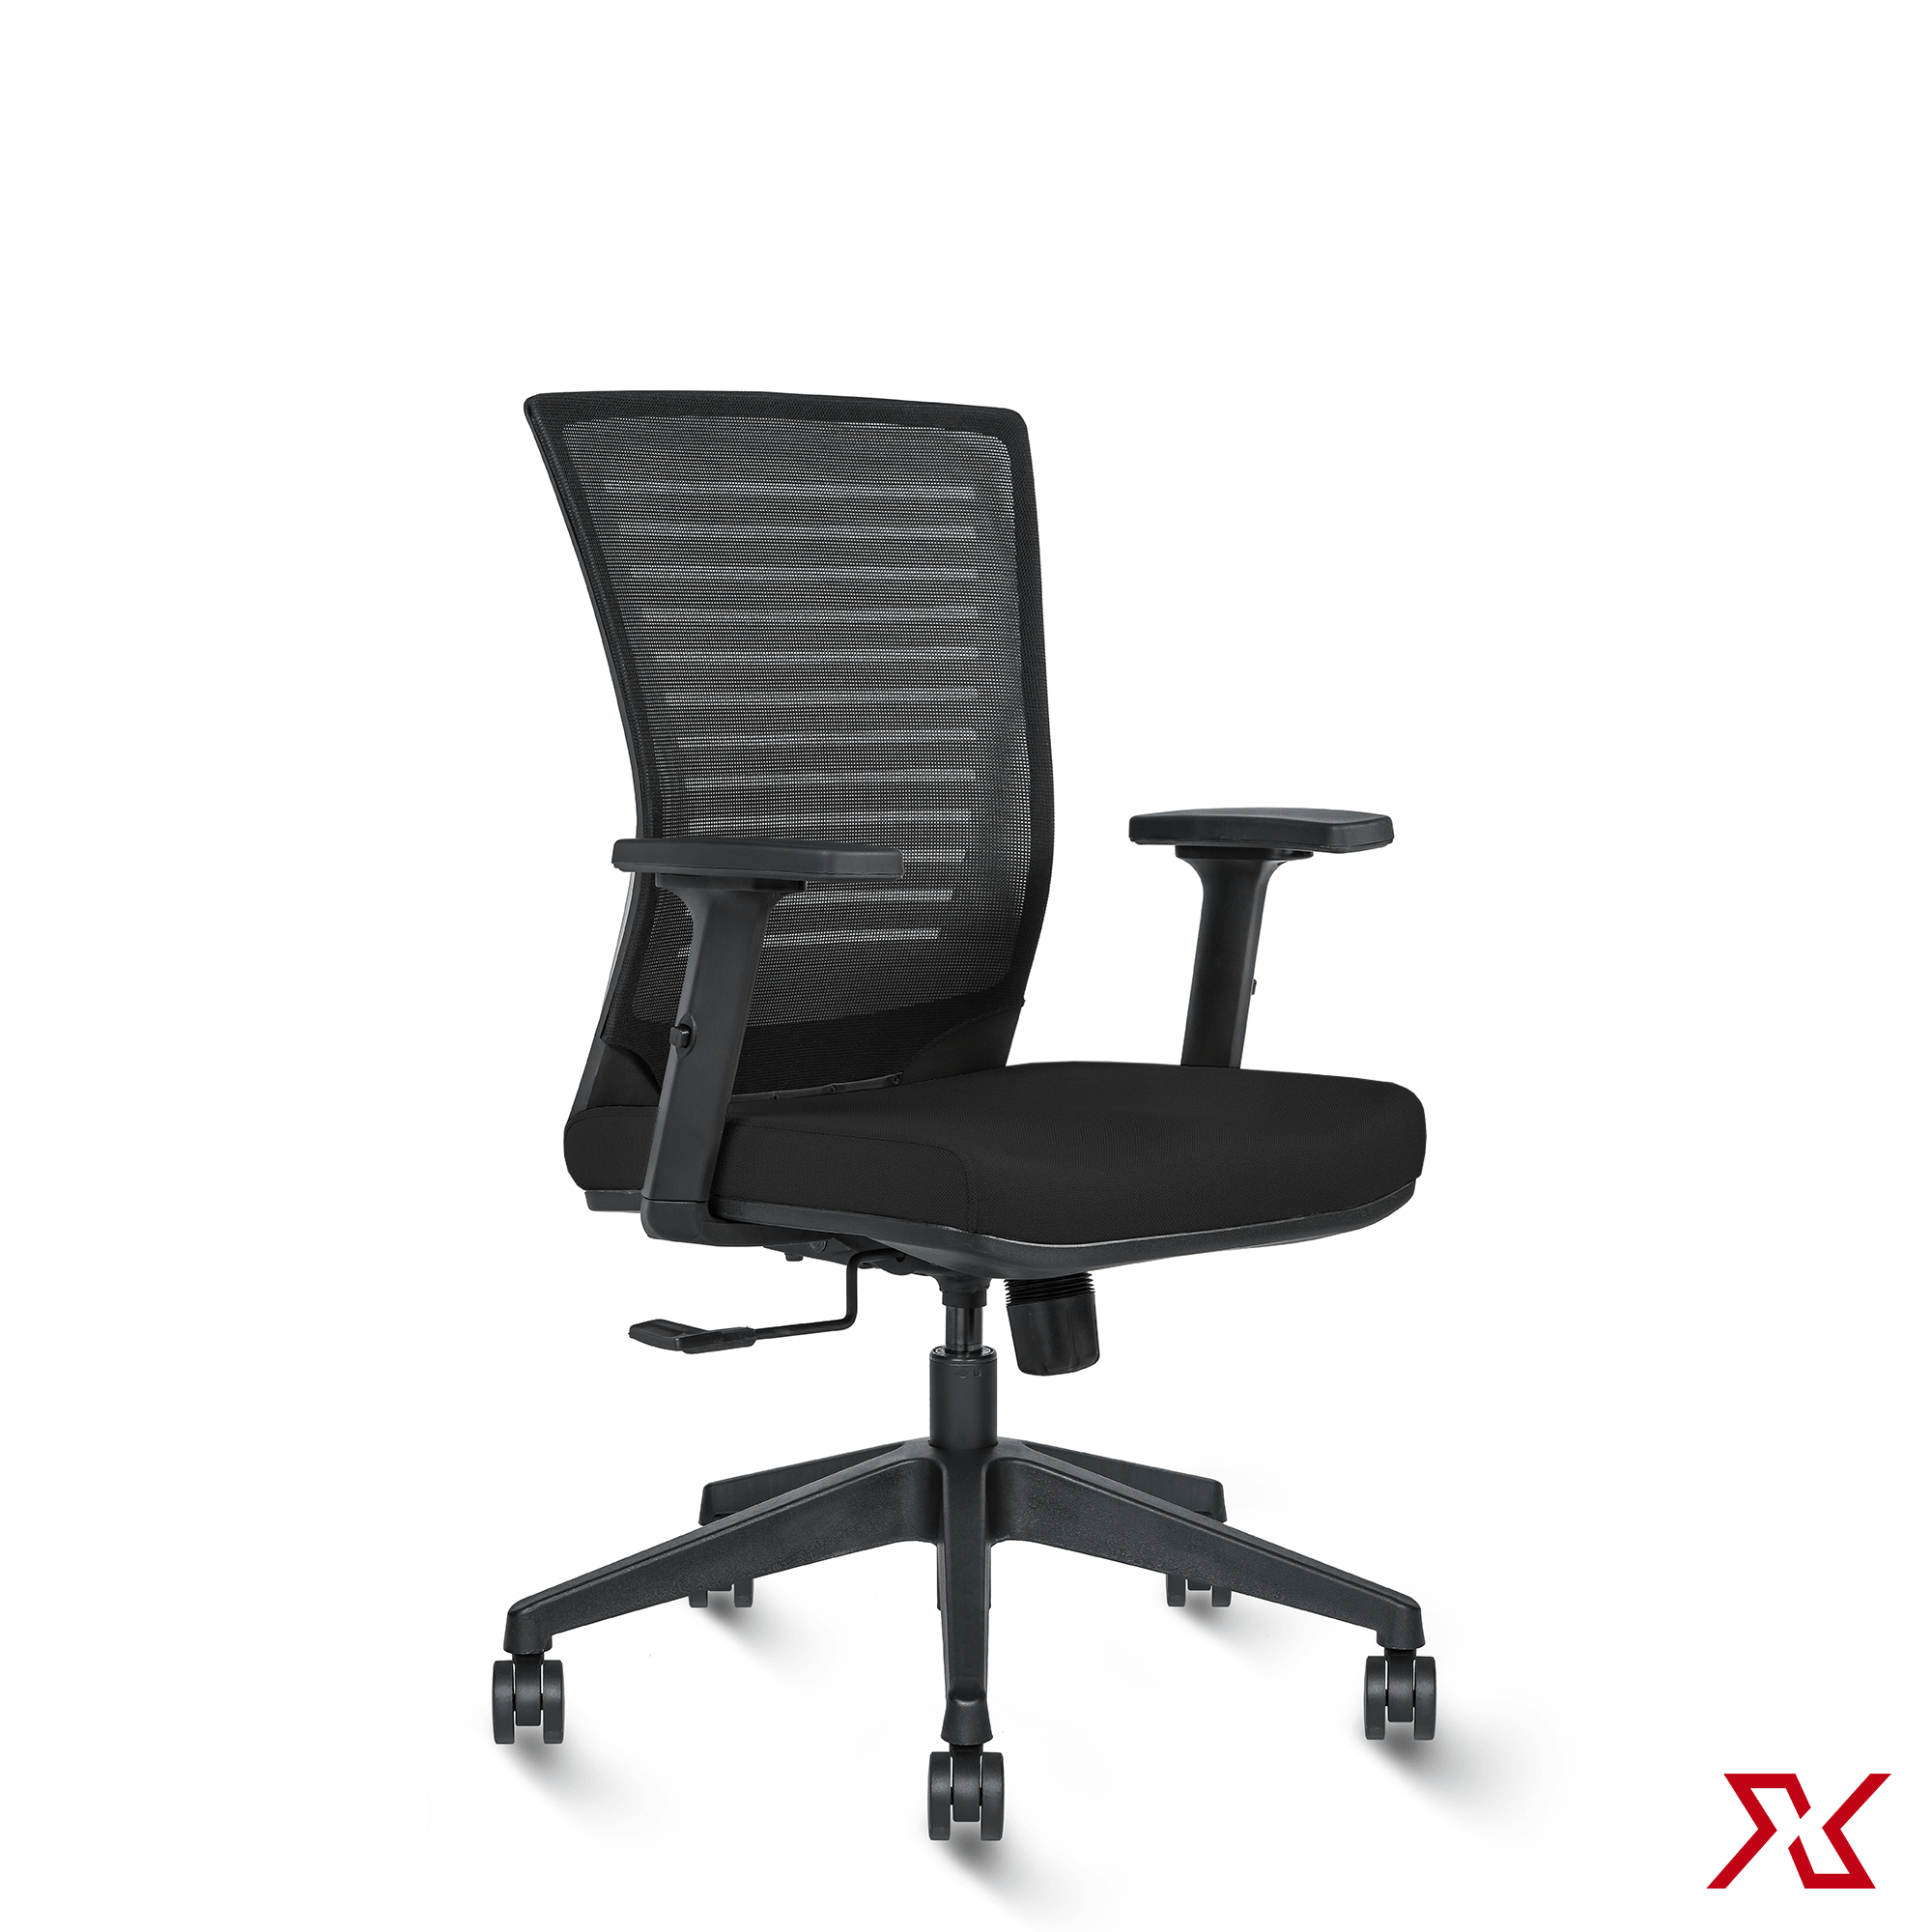 VINO Medium Back LX (Black Chair)